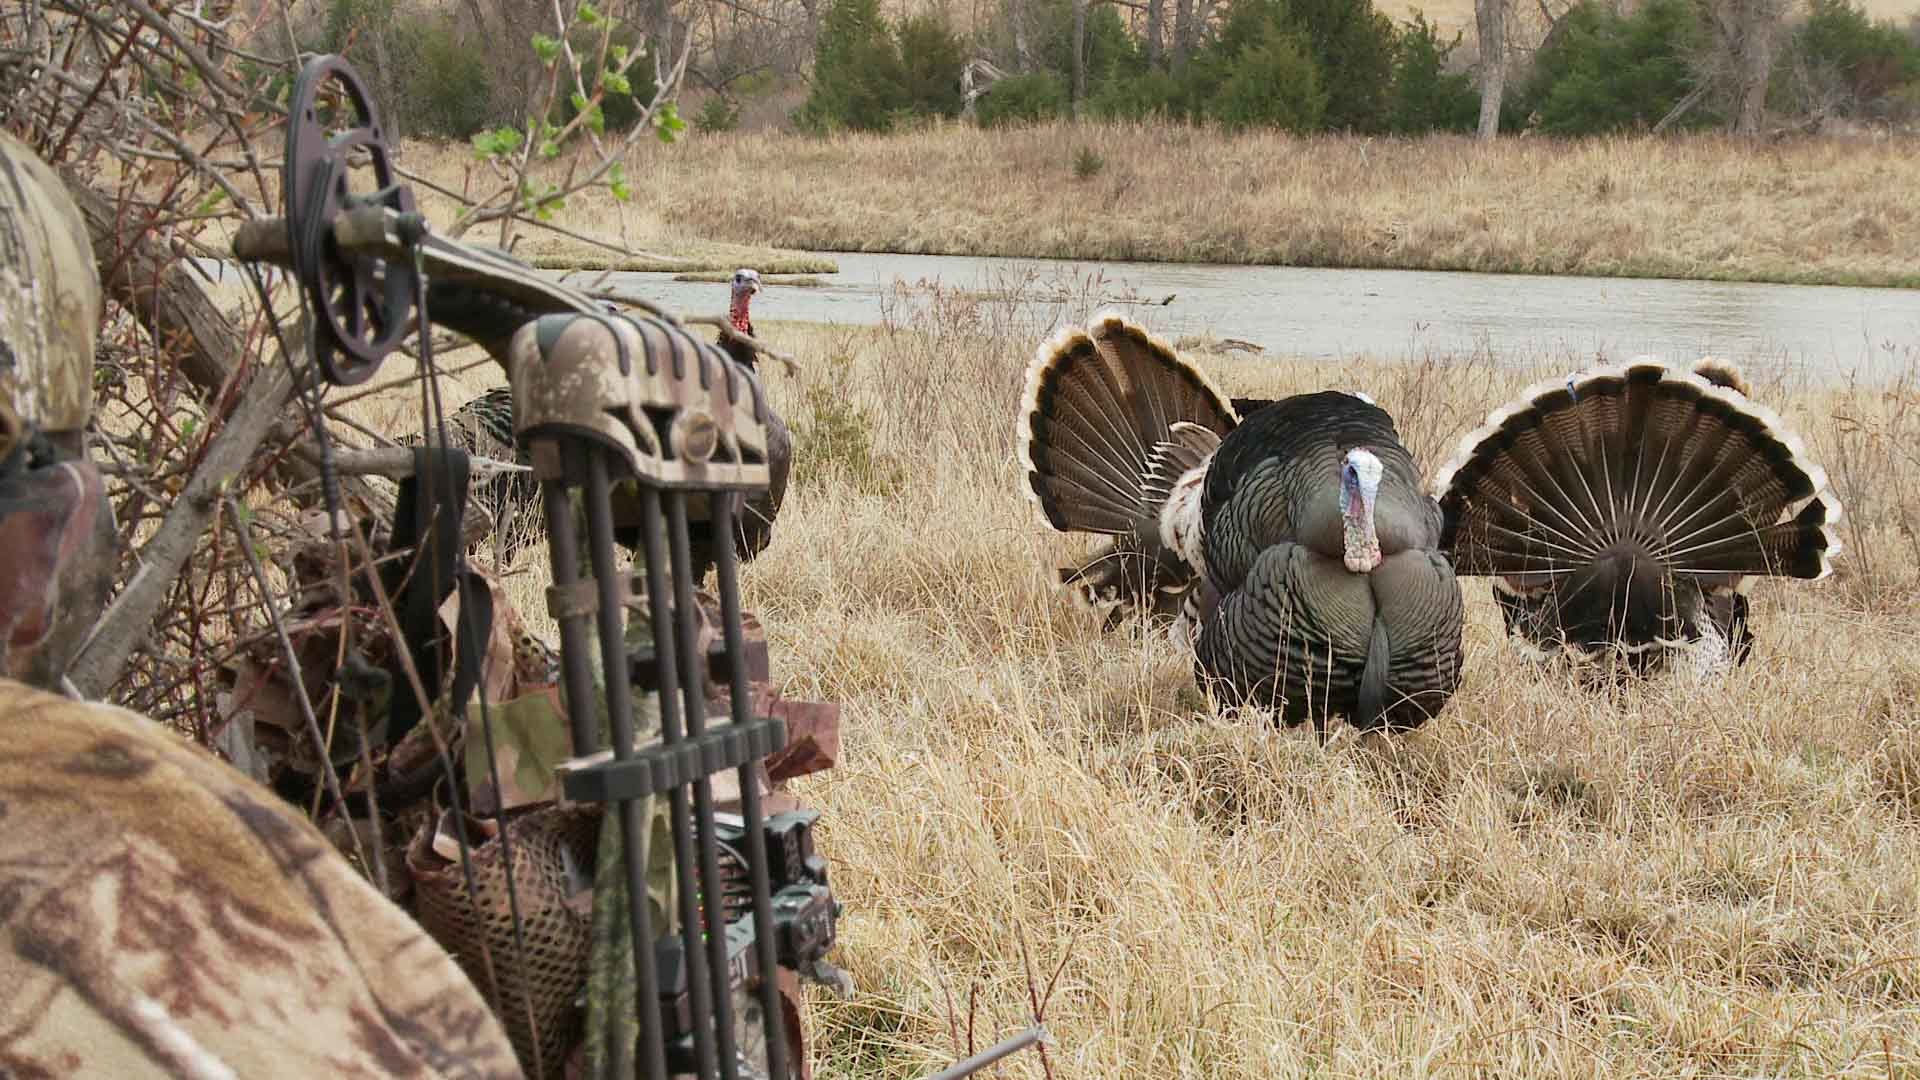 Turkey hunting backgrounds - photo# 11.